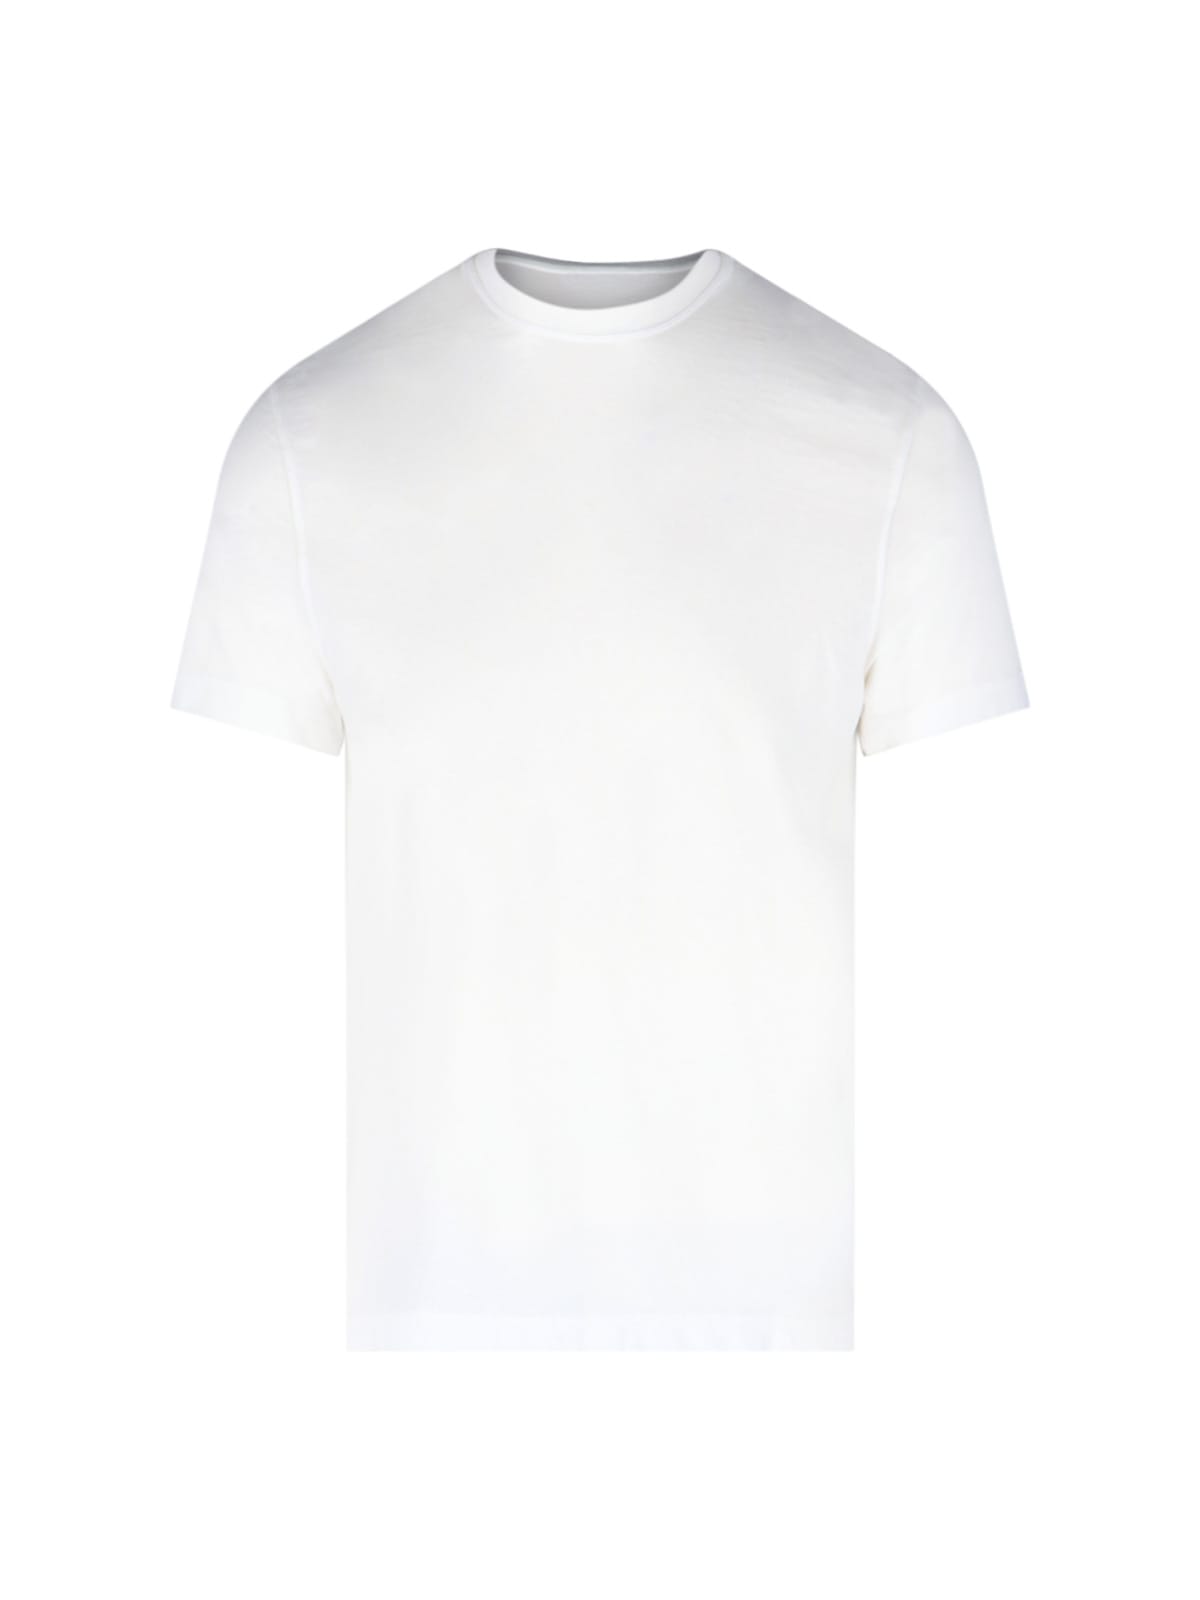 Shop Zanone Icecotton T-shirt In Bianco